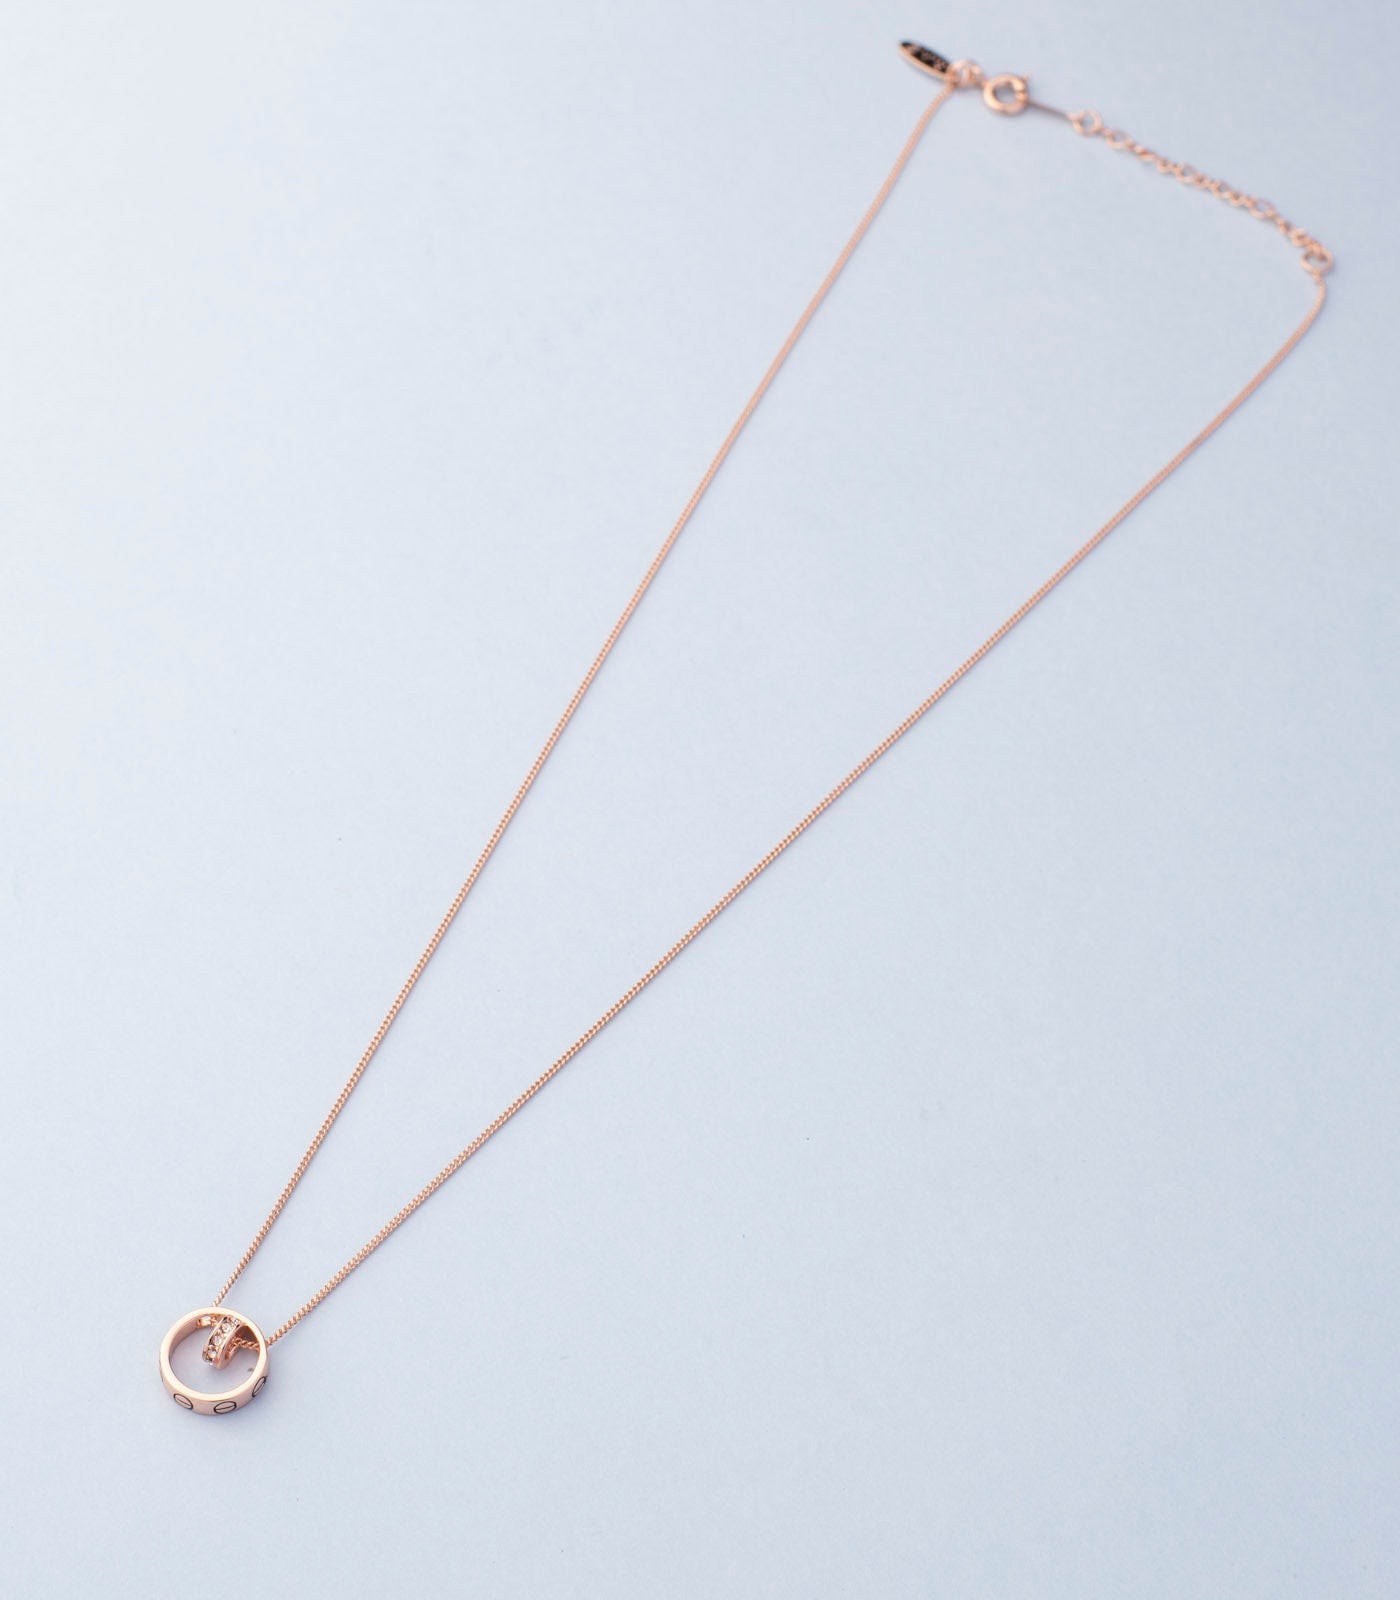 Ring of Tiara chain pendant (Brass)